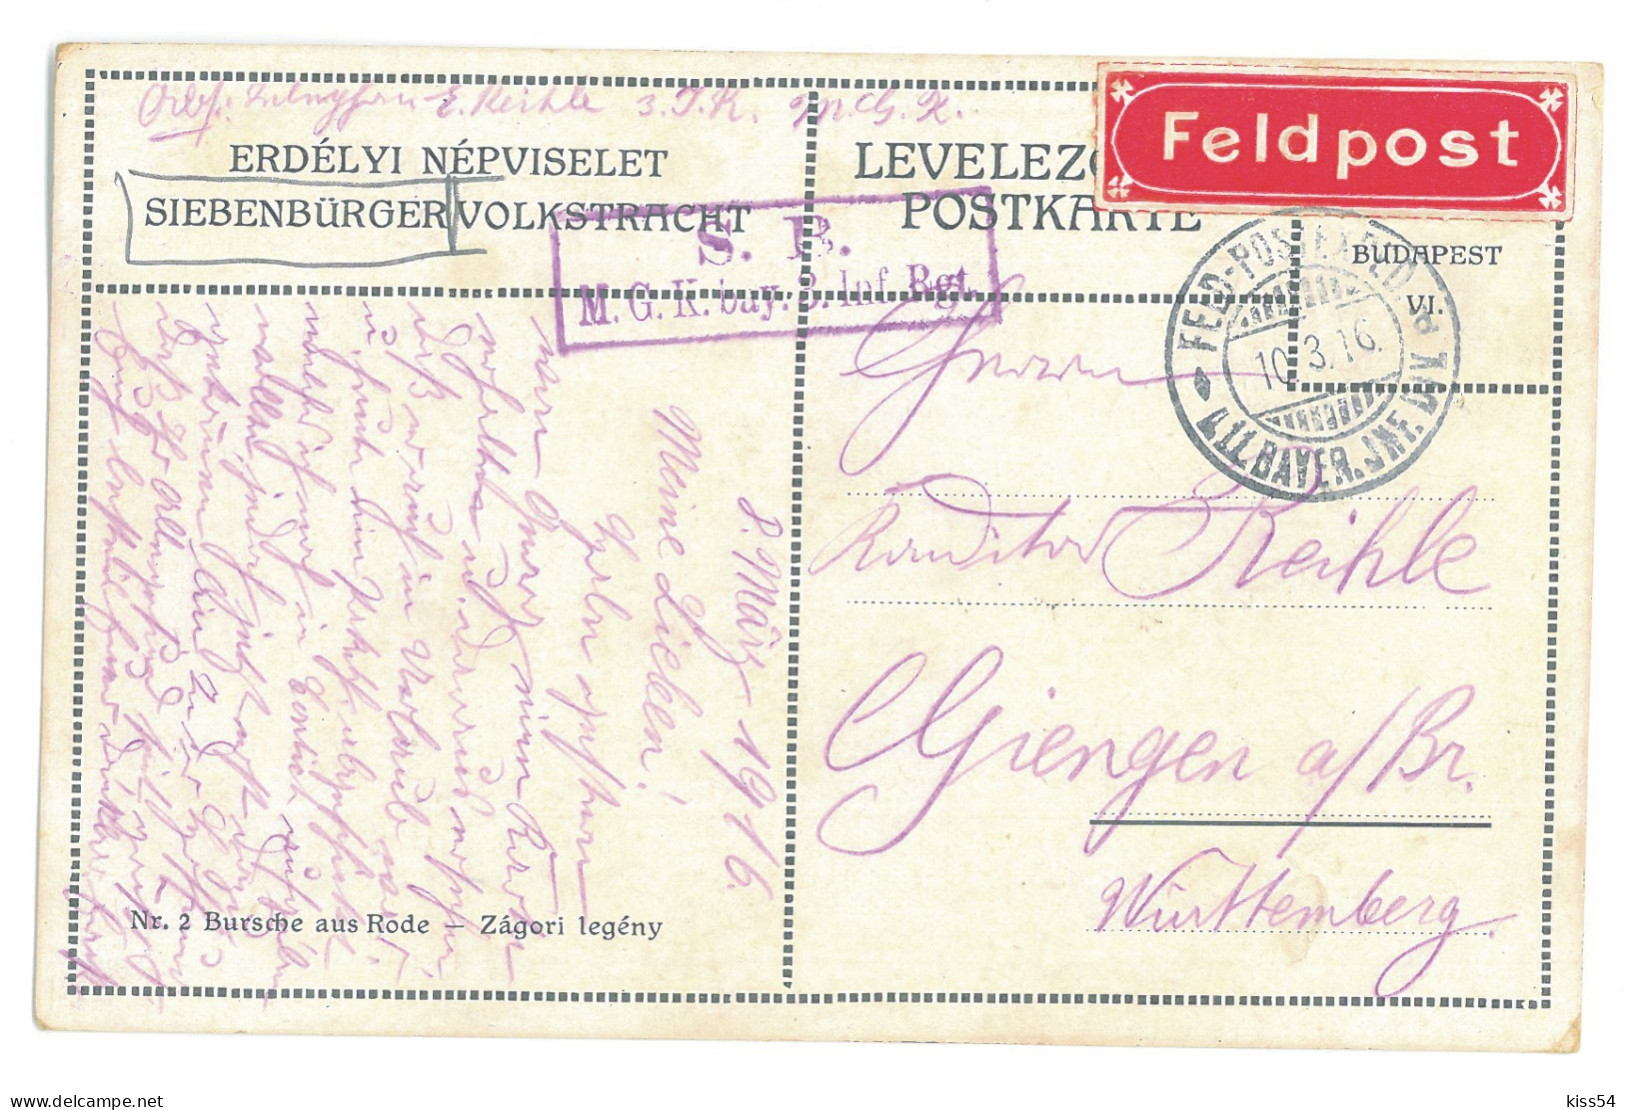 RO 35 - 18718 Ardeal ETHNIC FAMILY, Romania - Old Postcard, CENSOR - Used - 1916 - Rumania